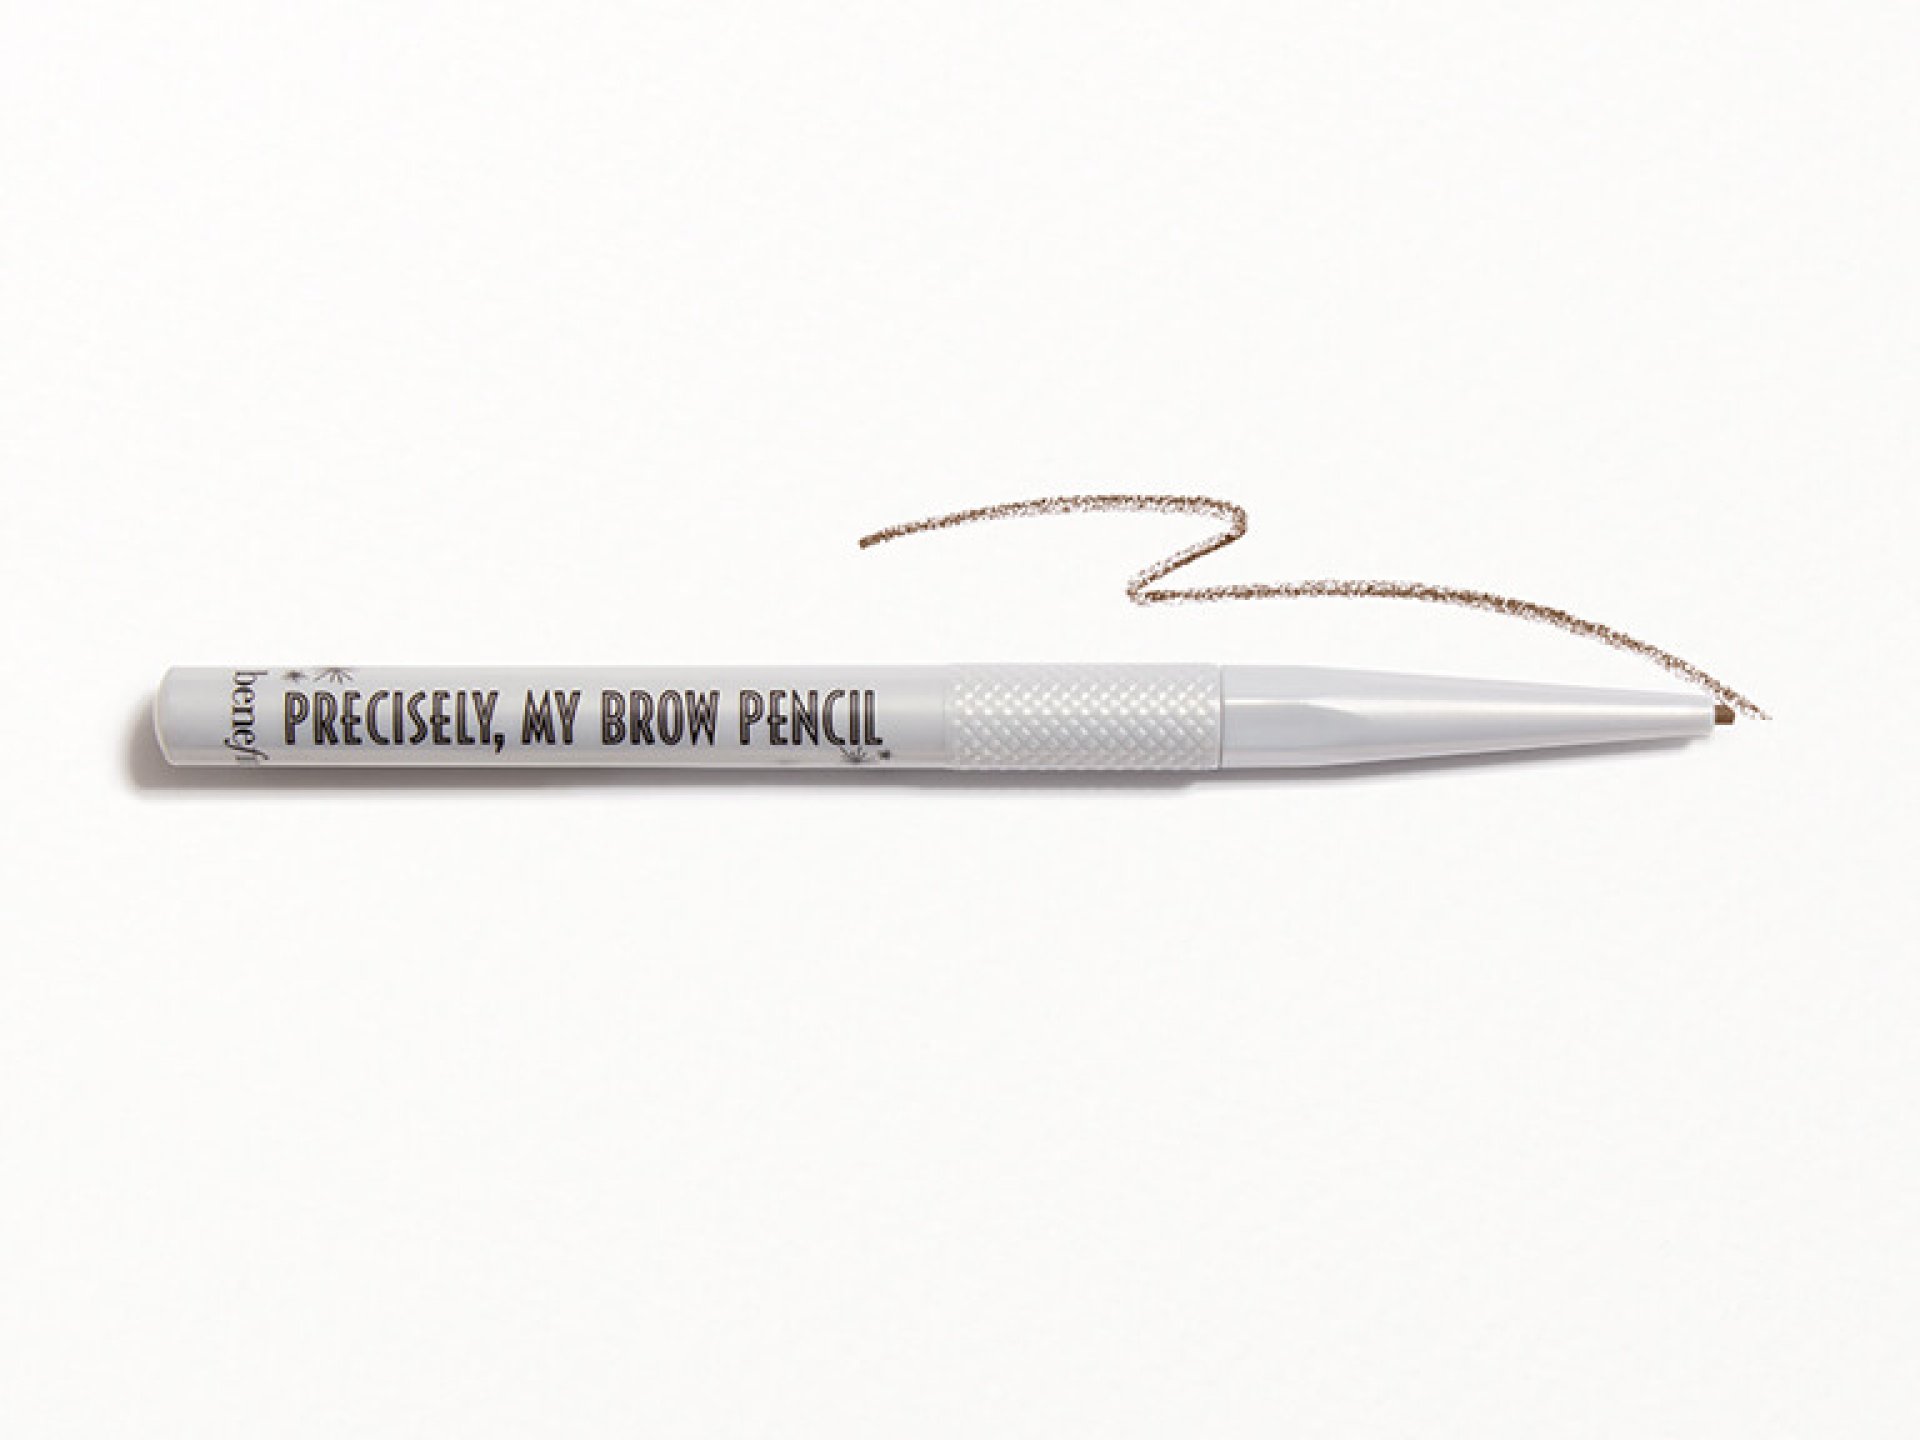 BENEFIT COSMETICS Precisely, My Brow Pencil Waterproof Eyebrow Definer in 3 - Warm Light Brown